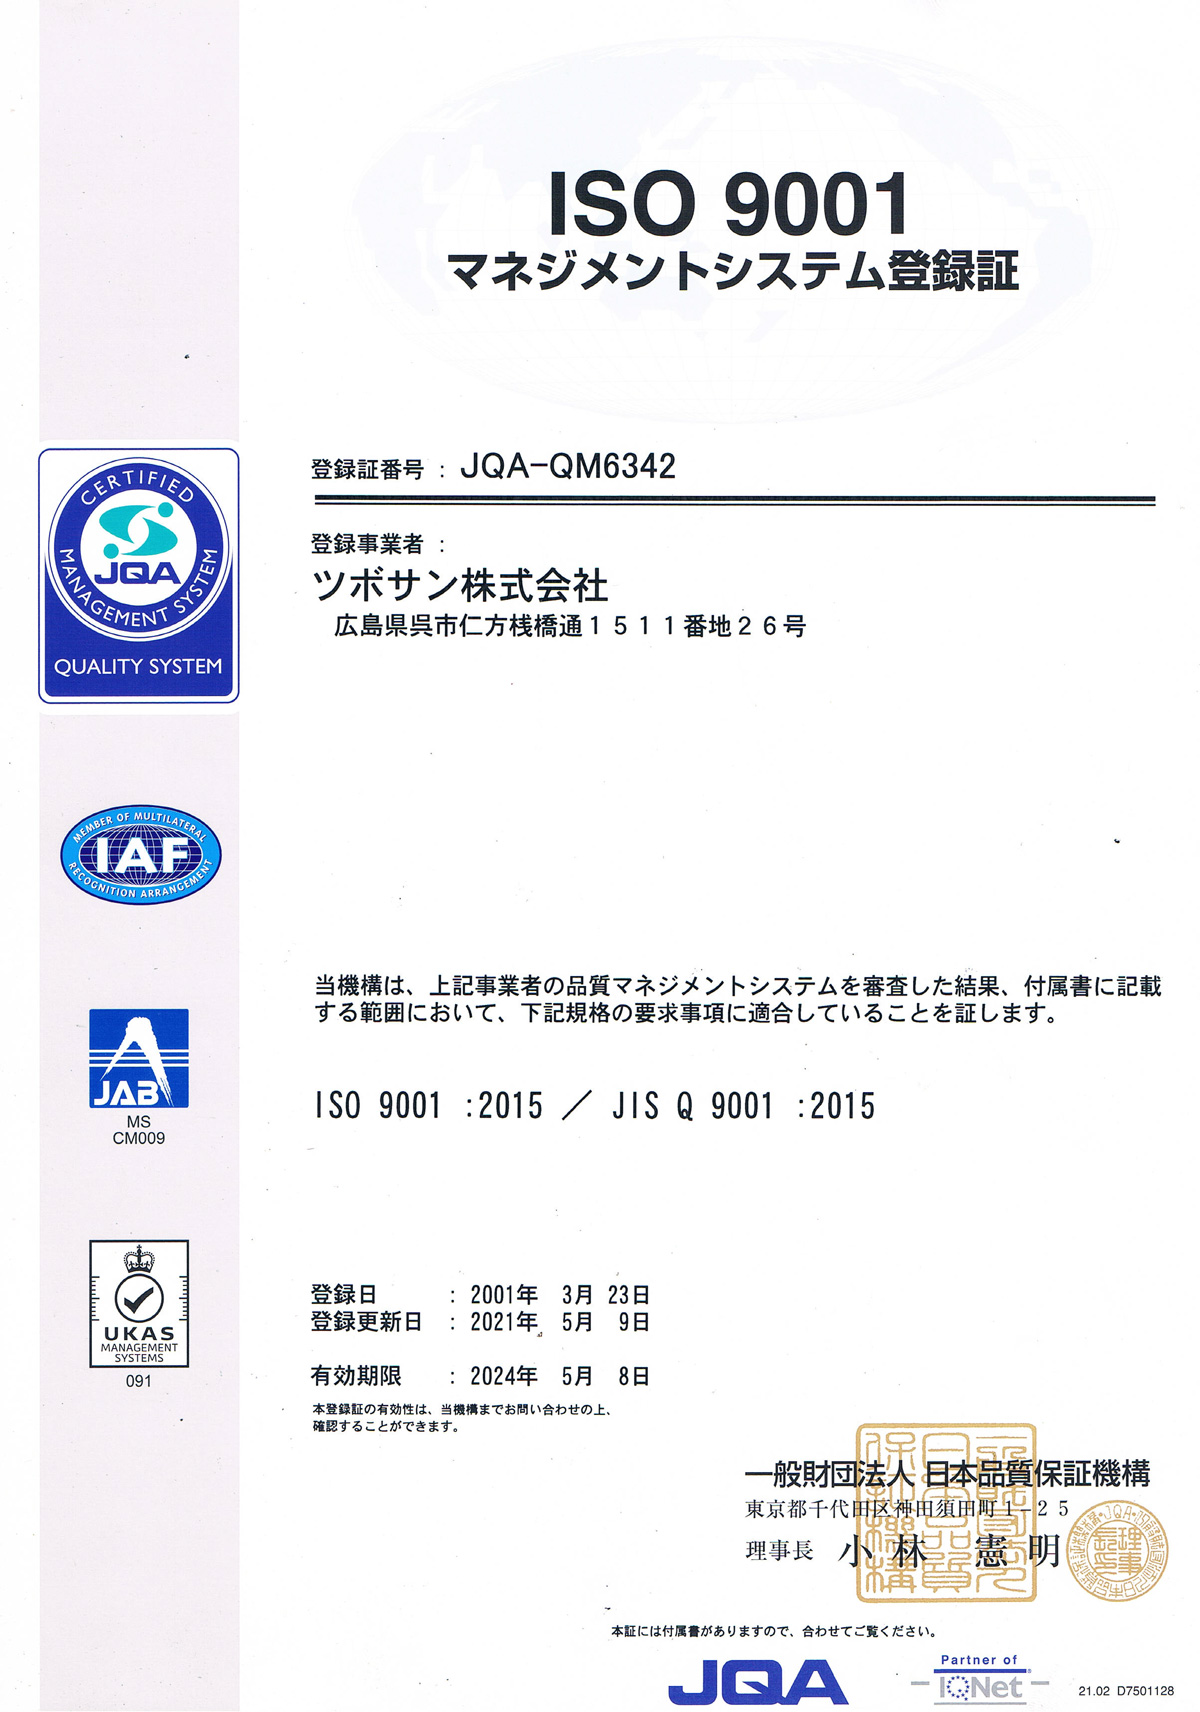 Management system registration certificate JQA-QM6342